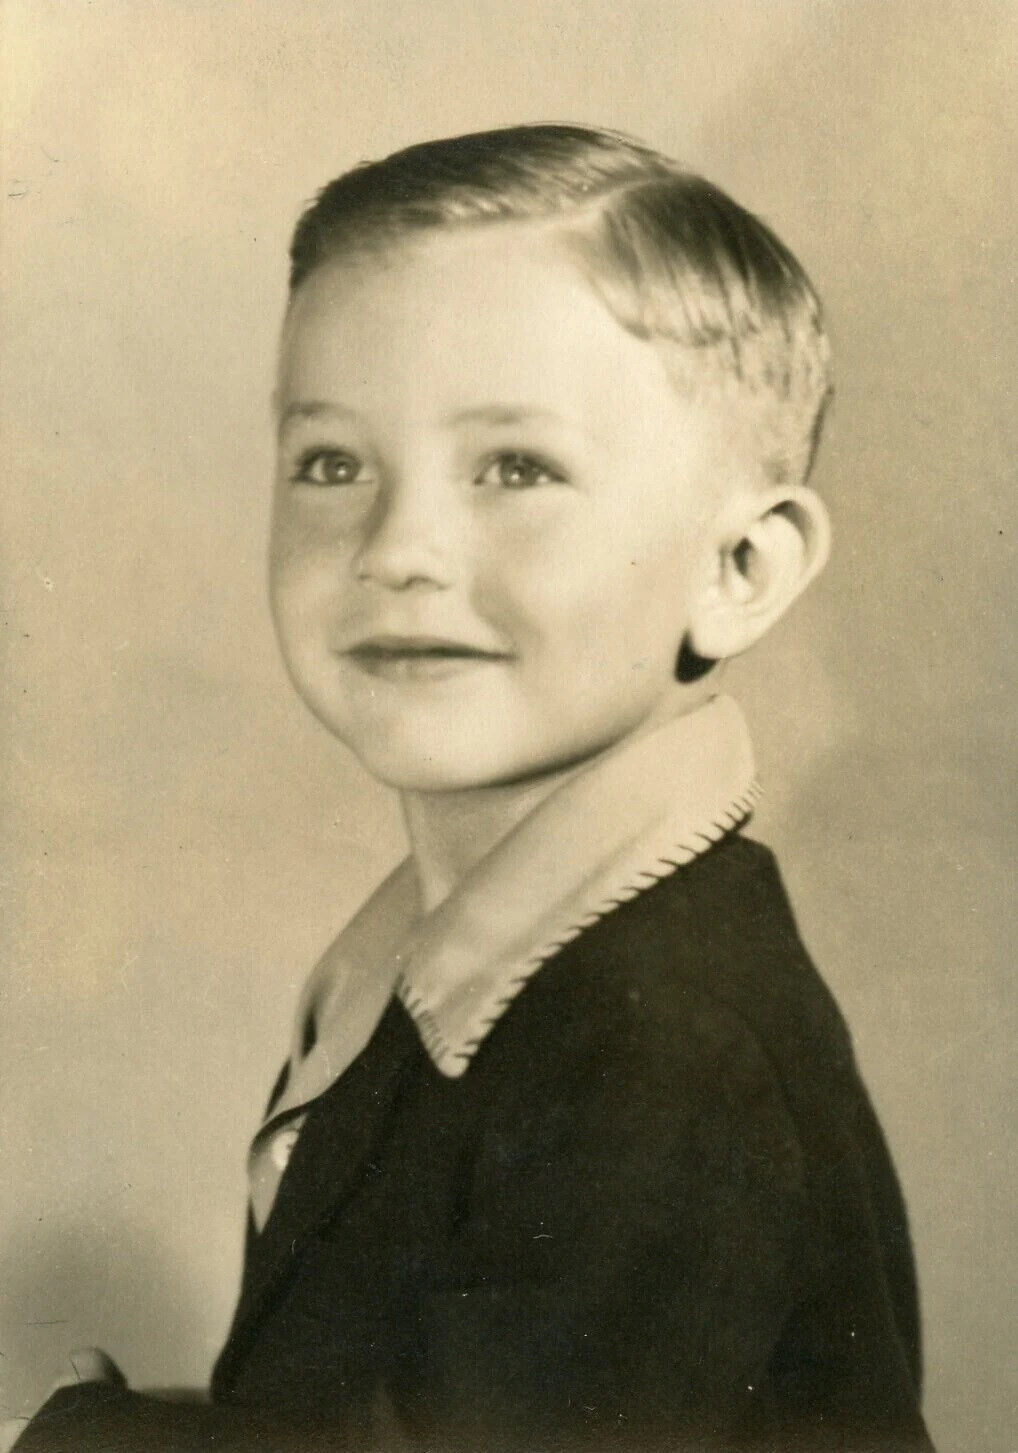 Boy Child Vintage Portrait Photo taken in Wichita Falls Texas Family Picture 75